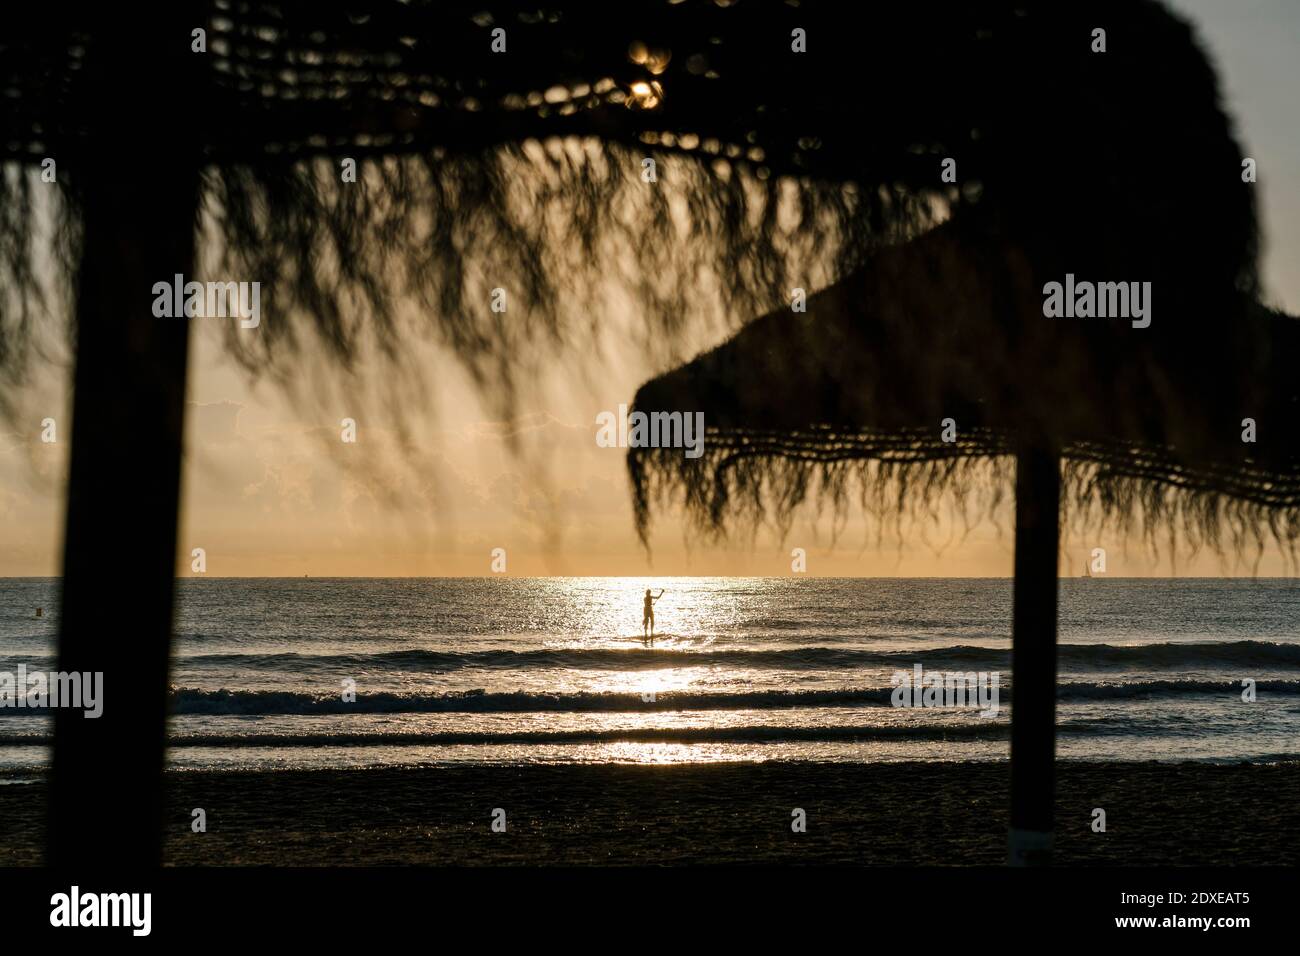 Silhouette Frau Surfen mit Paddleboard auf dem Meer bei Sonnenaufgang Stockfoto